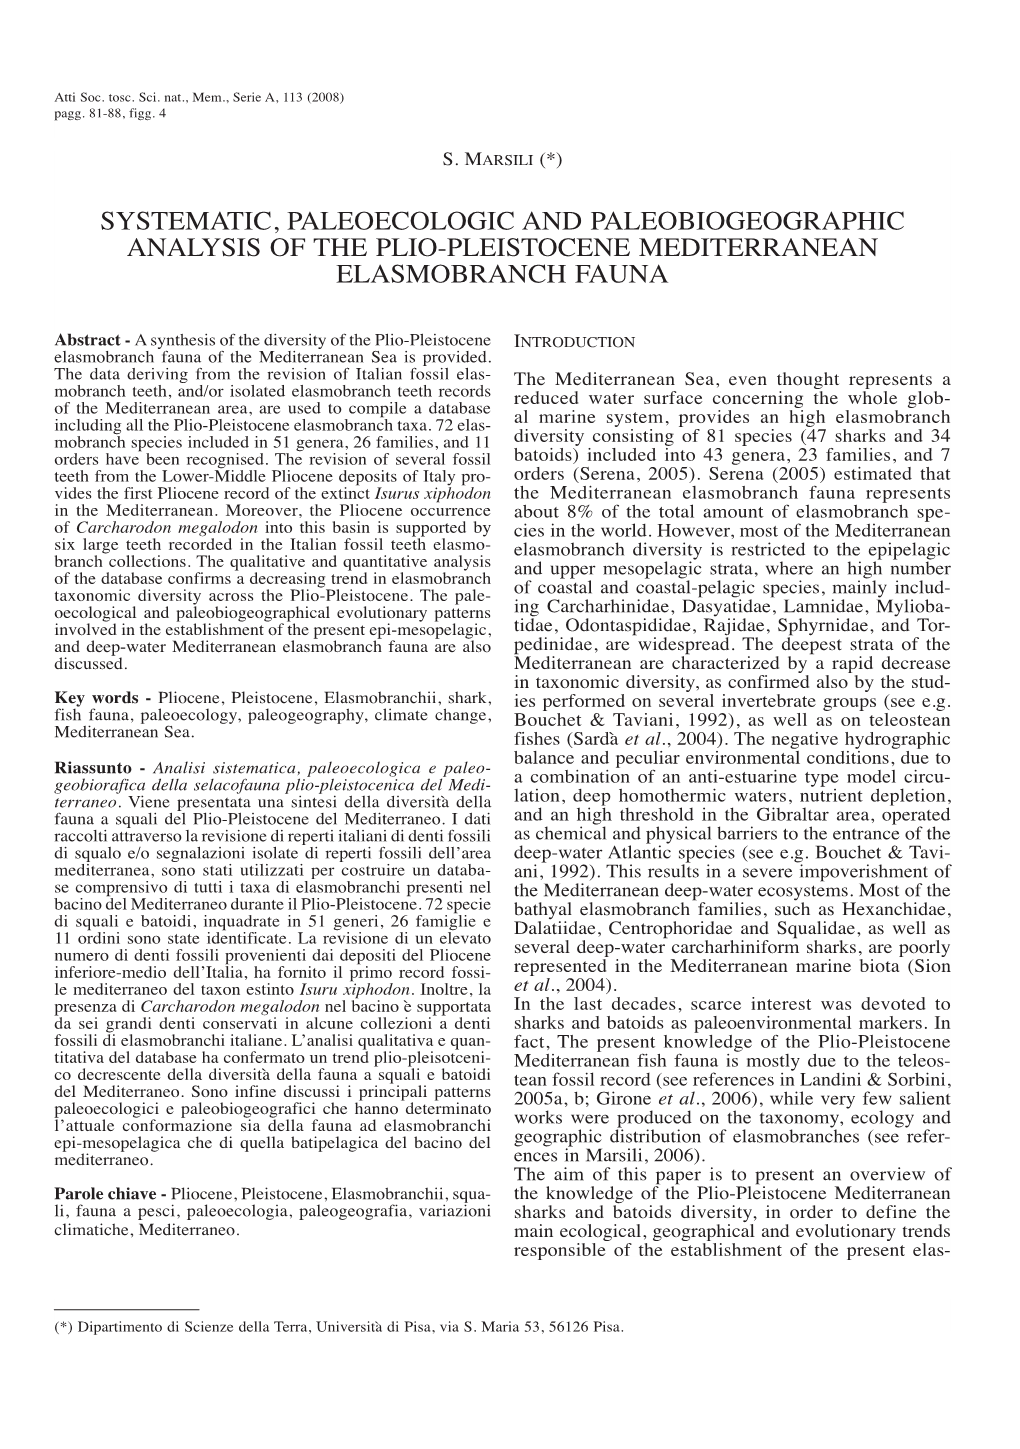 Systematic, Paleoecologic and Paleobiogeographic Analysis of the Plio-Pleistocene Mediterranean Elasmobranch Fauna